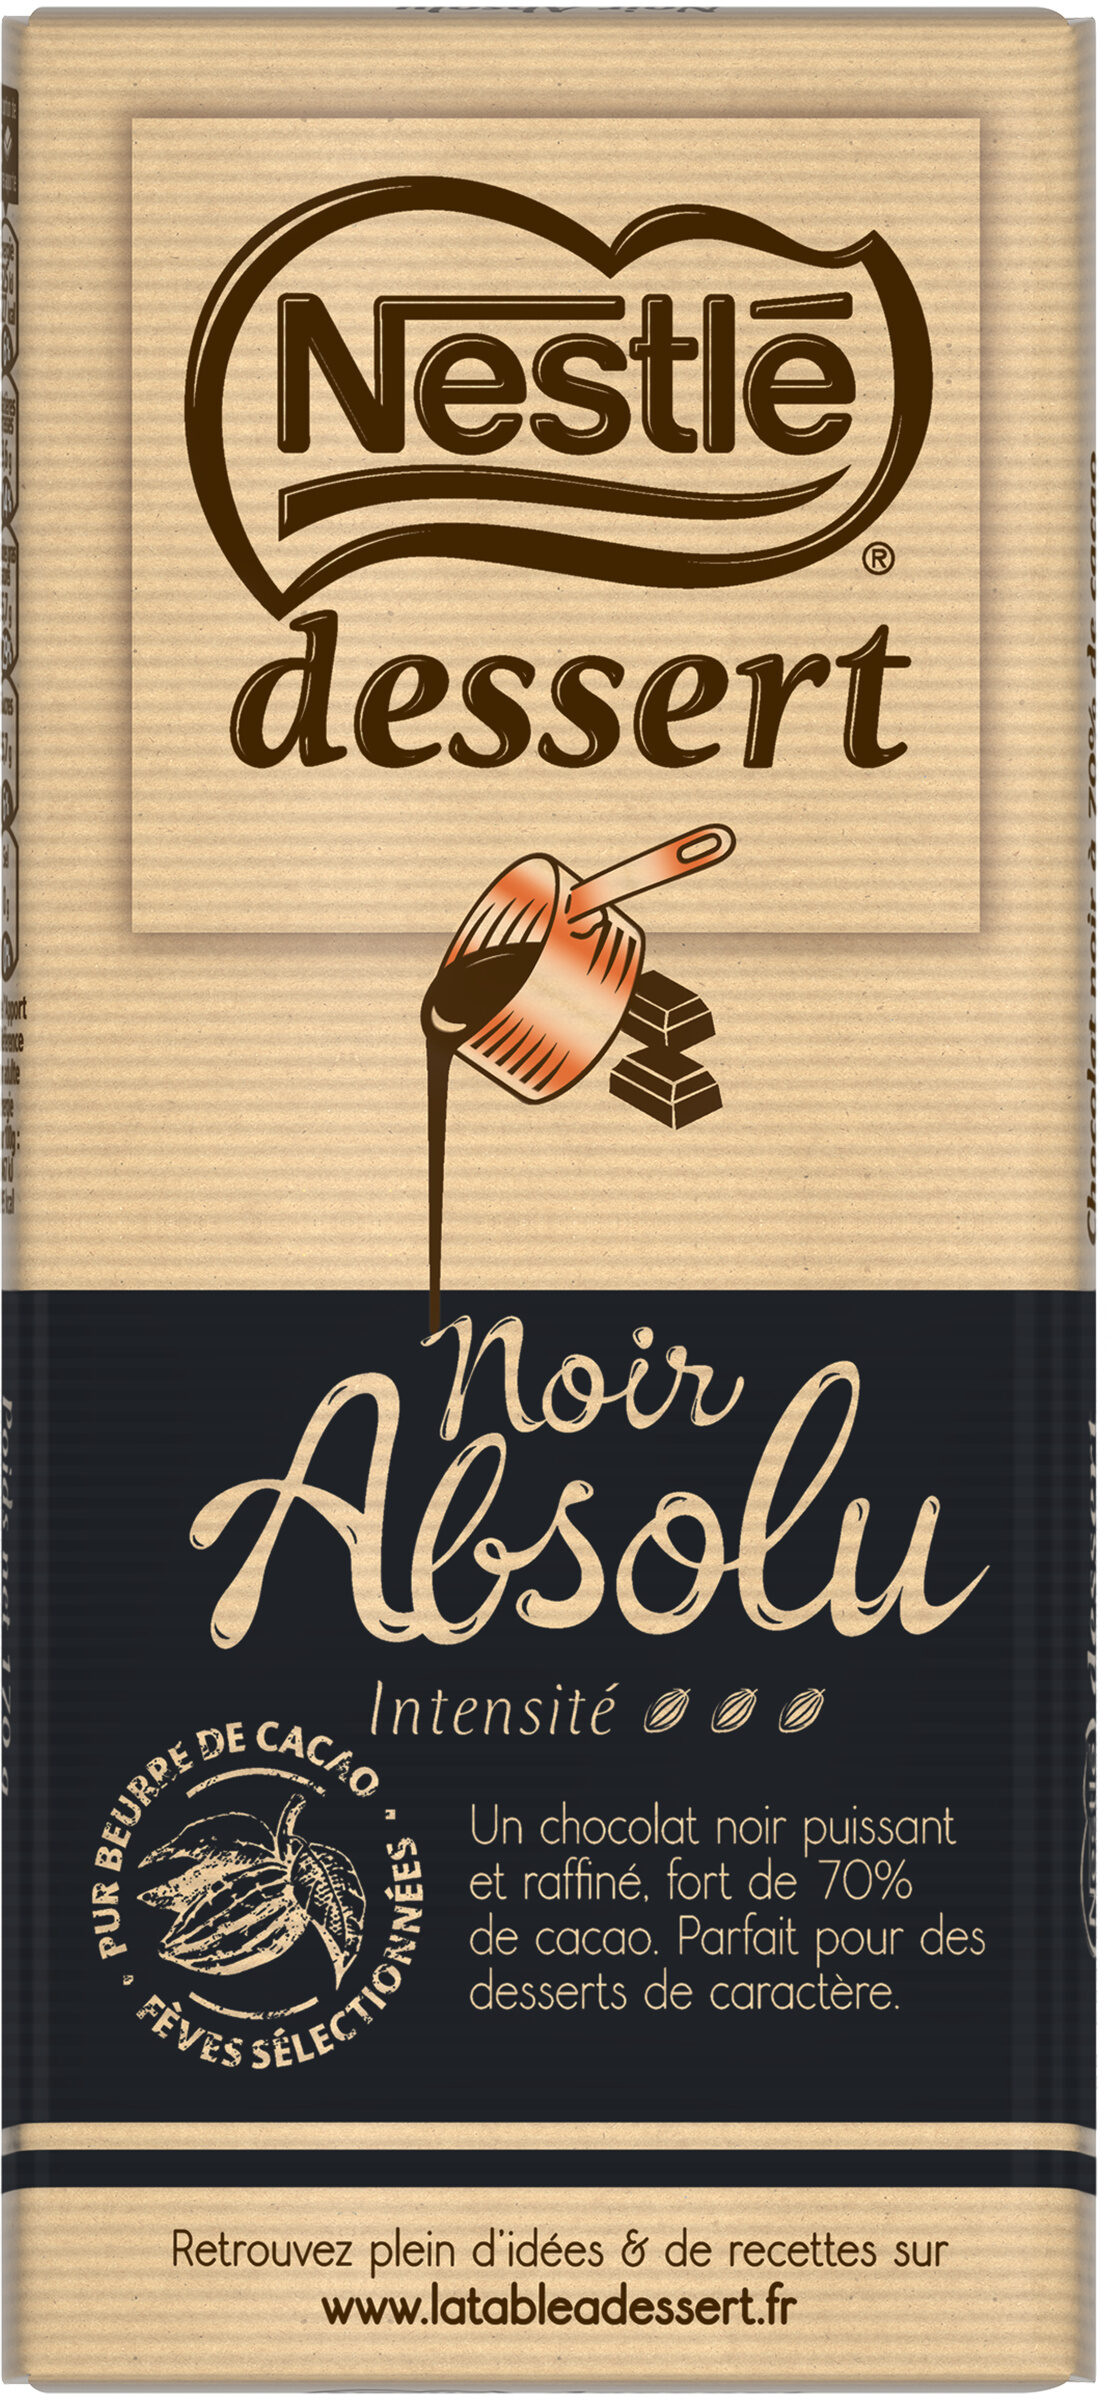 NESTLE DESSERT Chocolat Noir Absolu - Product - en